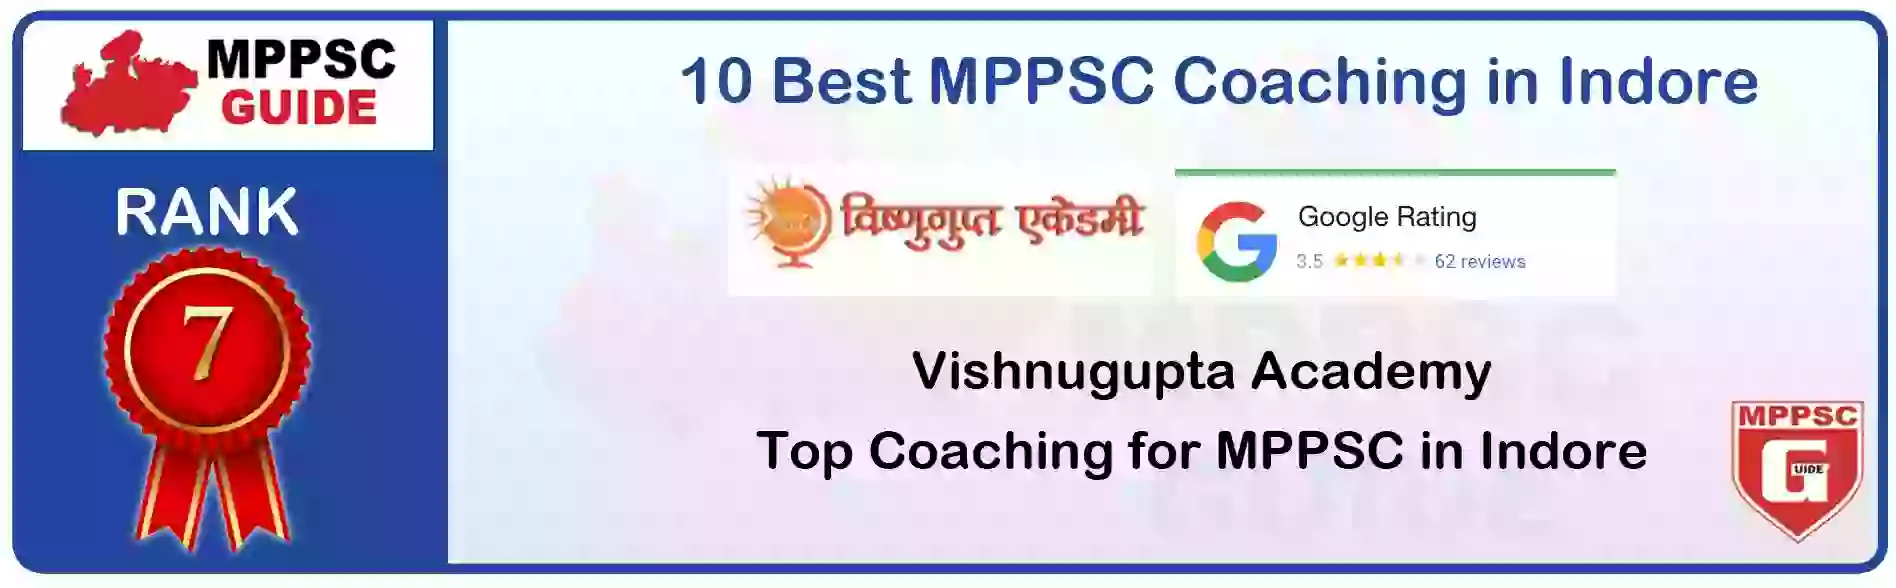 MPPSC Coaching in Narsinghpur, MPPSC Coaching Institute In Narsinghpur, Best MPPSC Coaching in Narsinghpur, Top 10 MPPSC Coaching In Narsinghpur, best mppsc coaching institute in narsinghpur, MPPSC Coaching Classes In Narsinghpur, MPPSC Online Coaching In Narsinghpur, mppsc coaching in Narsinghpur bhanwarkua